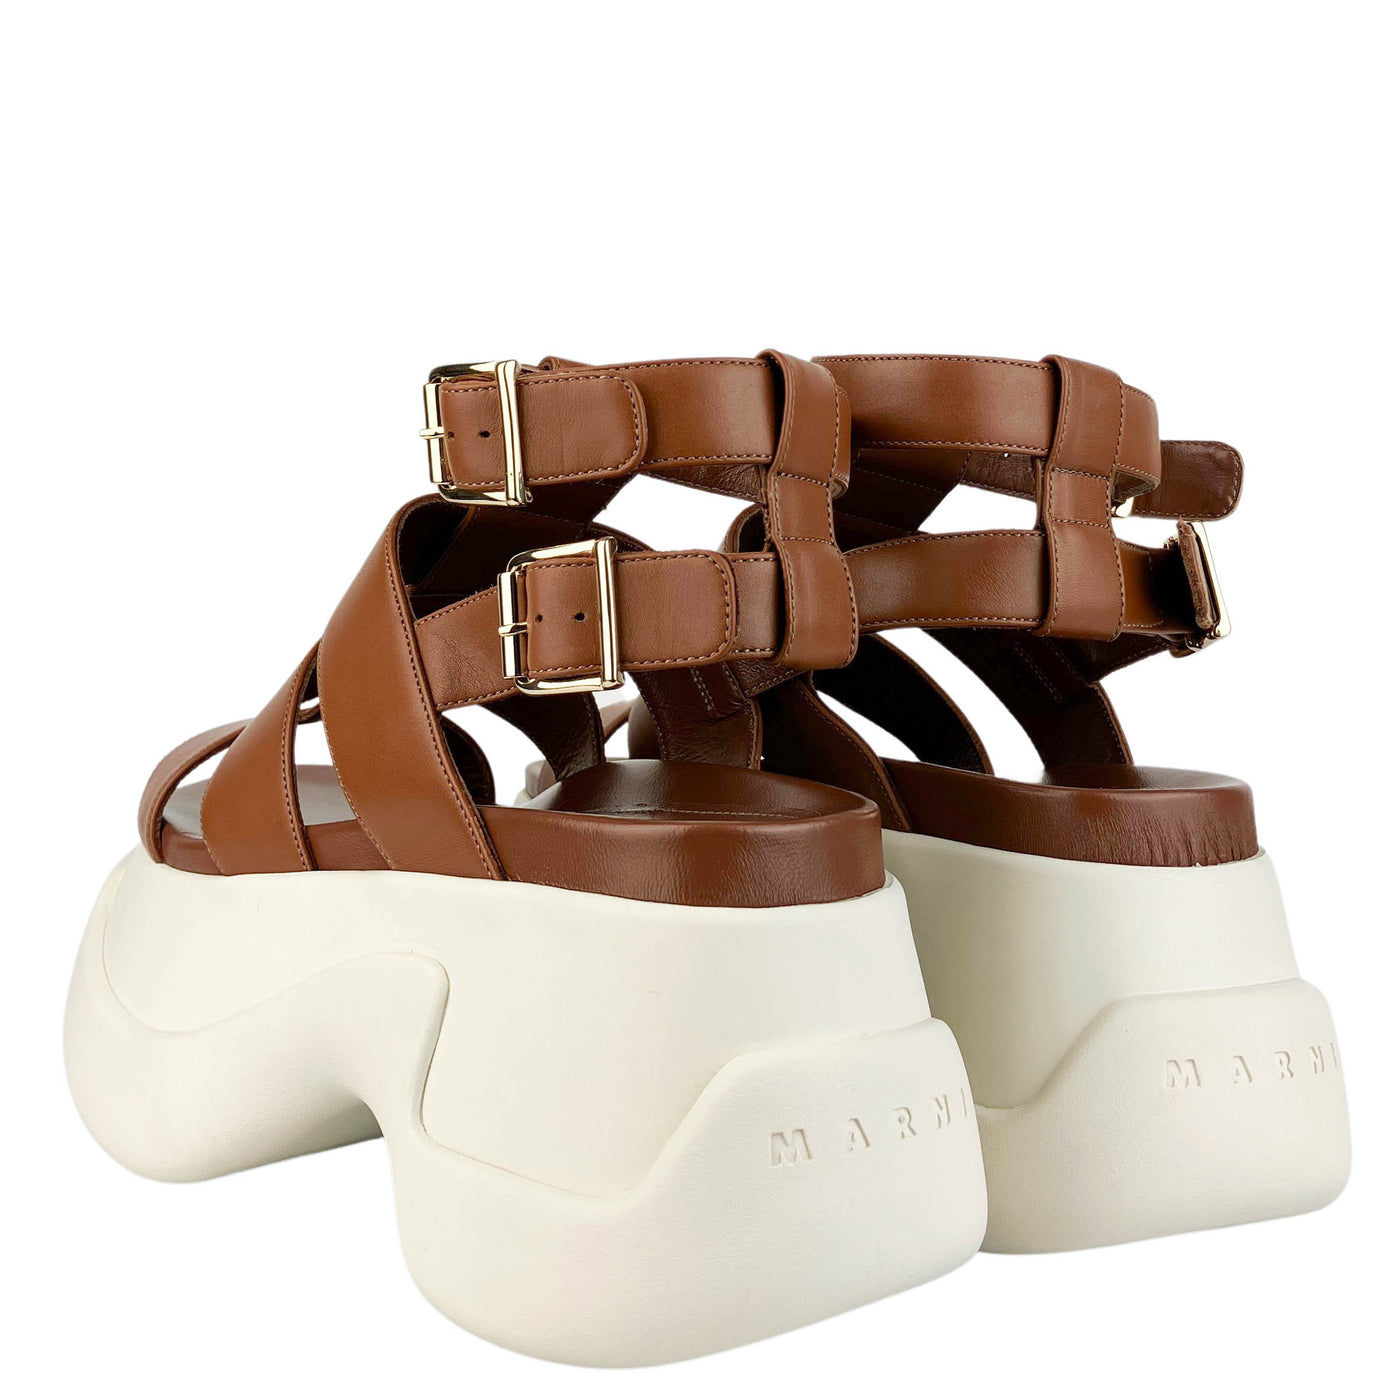 Marni Platform Sandals in Brown - Discounts on Marni at UAL